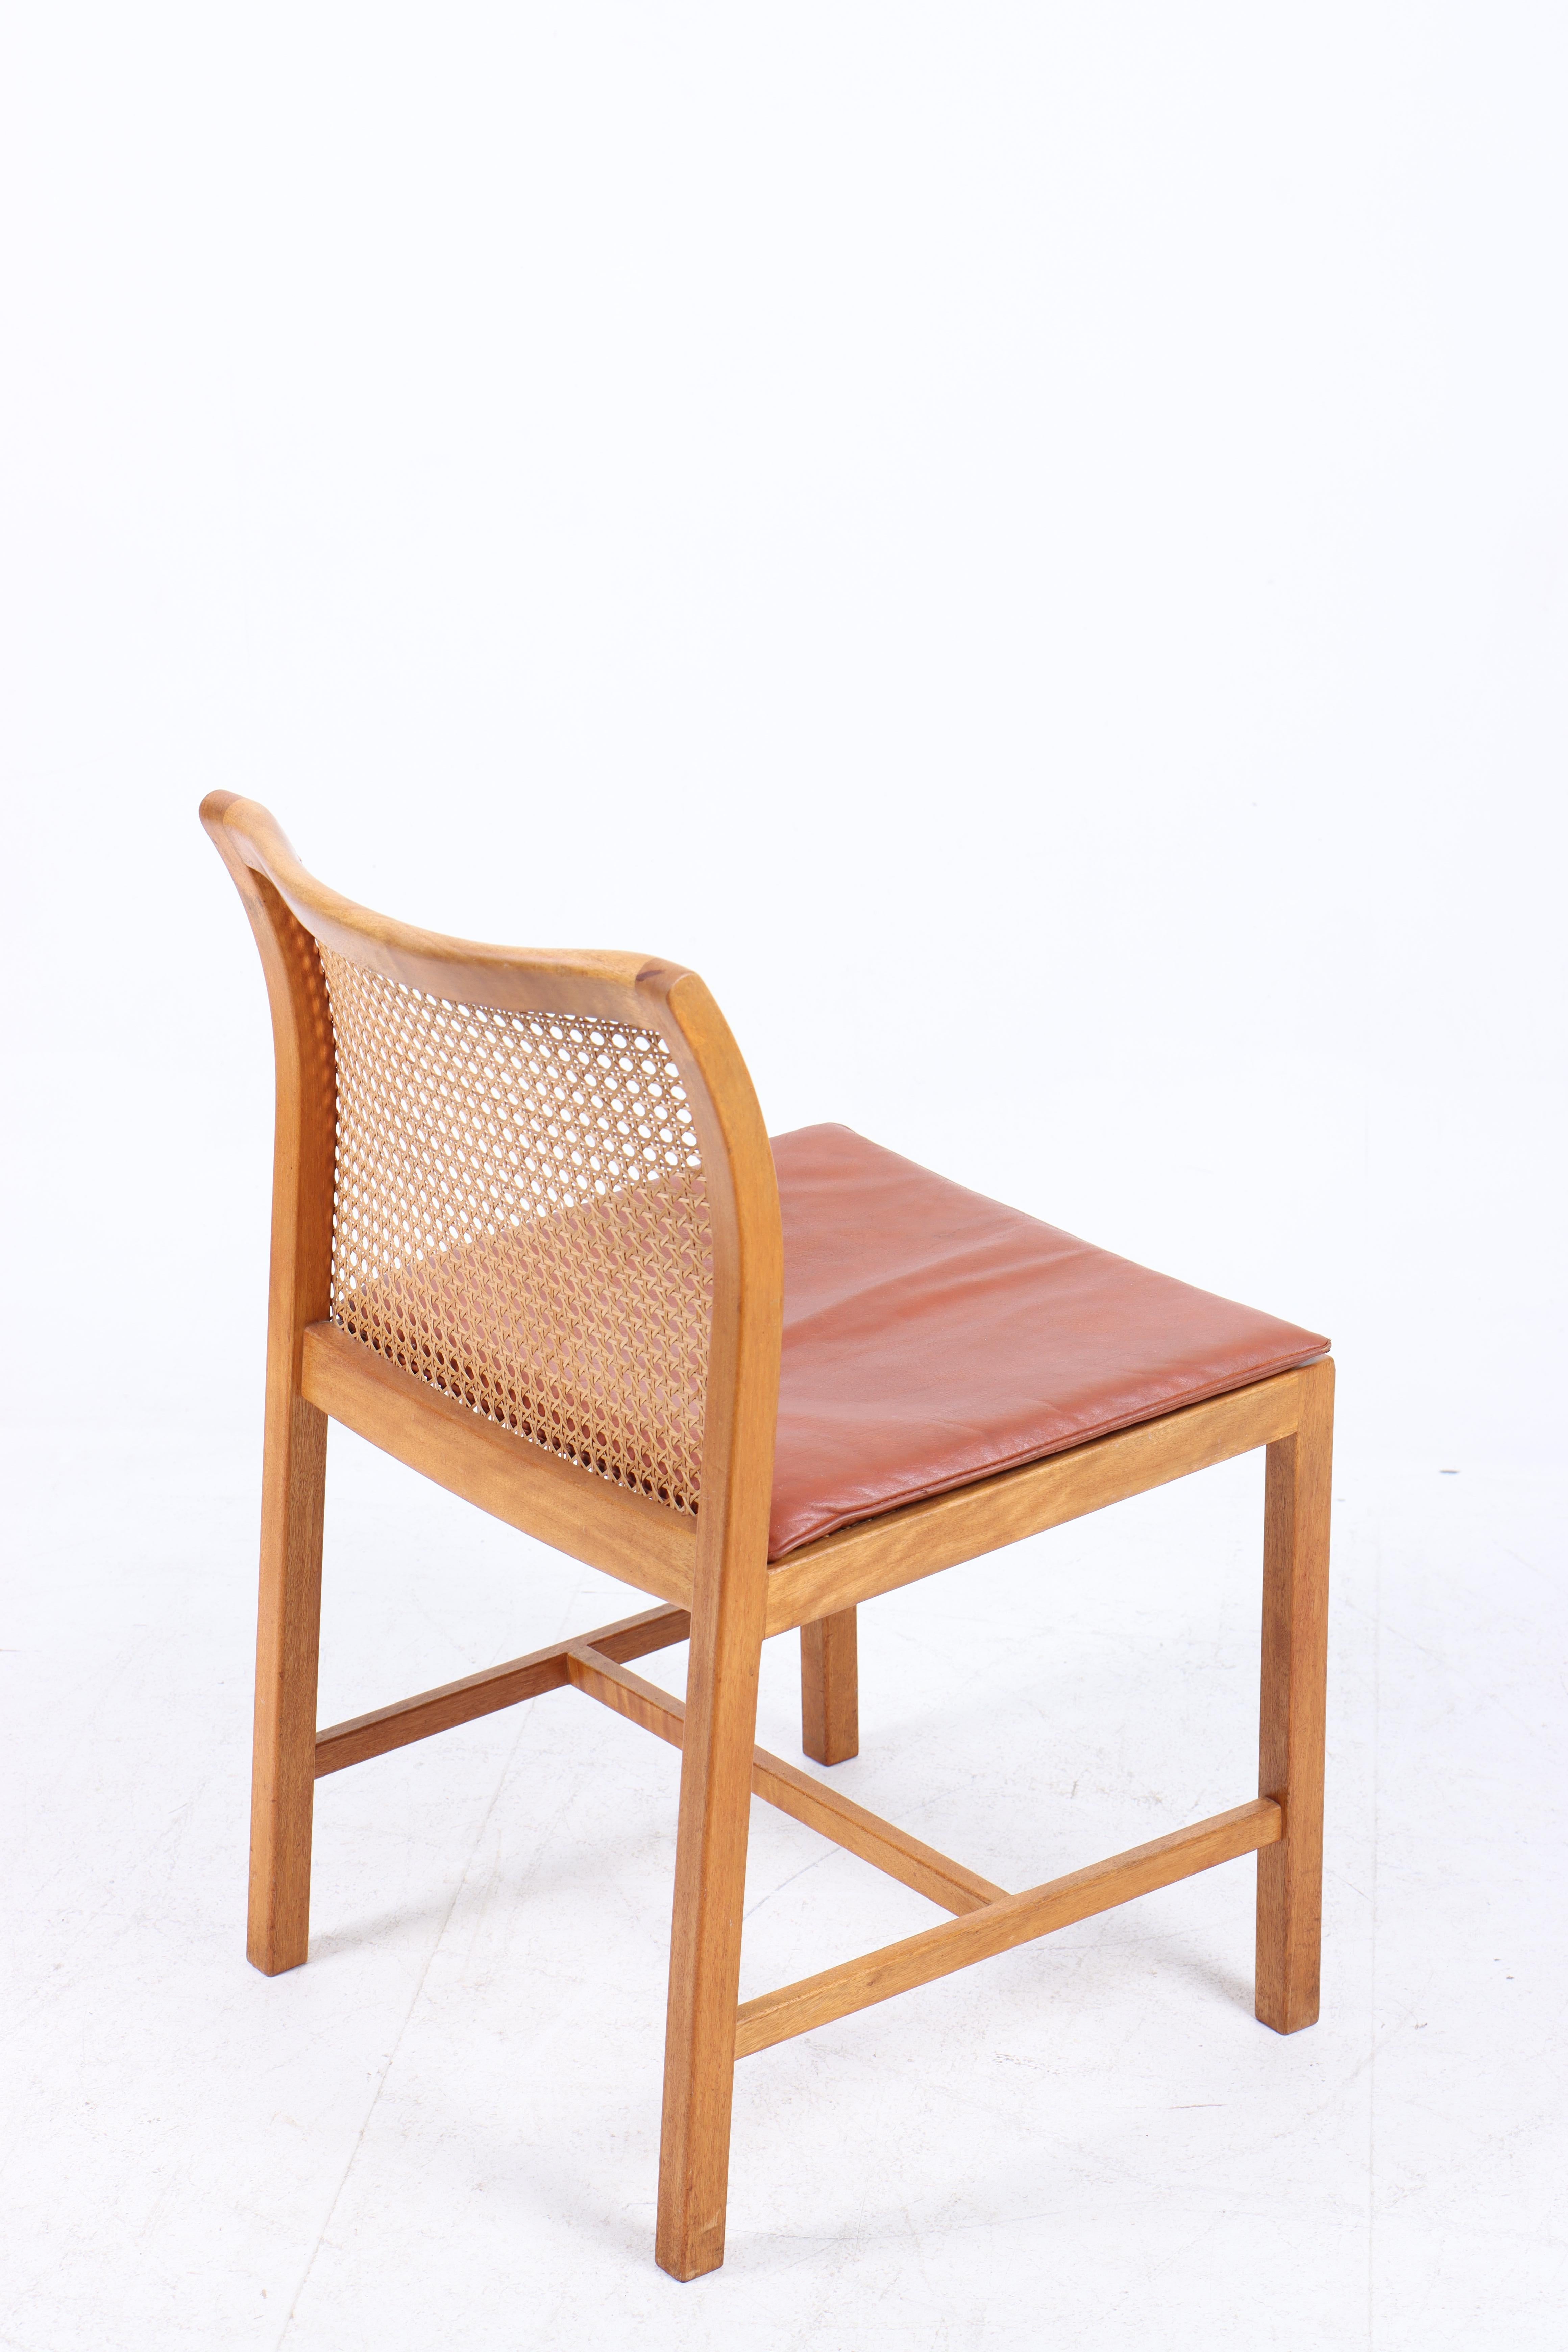 Mid-20th Century Danish Midcentury Side Chair, 1960s